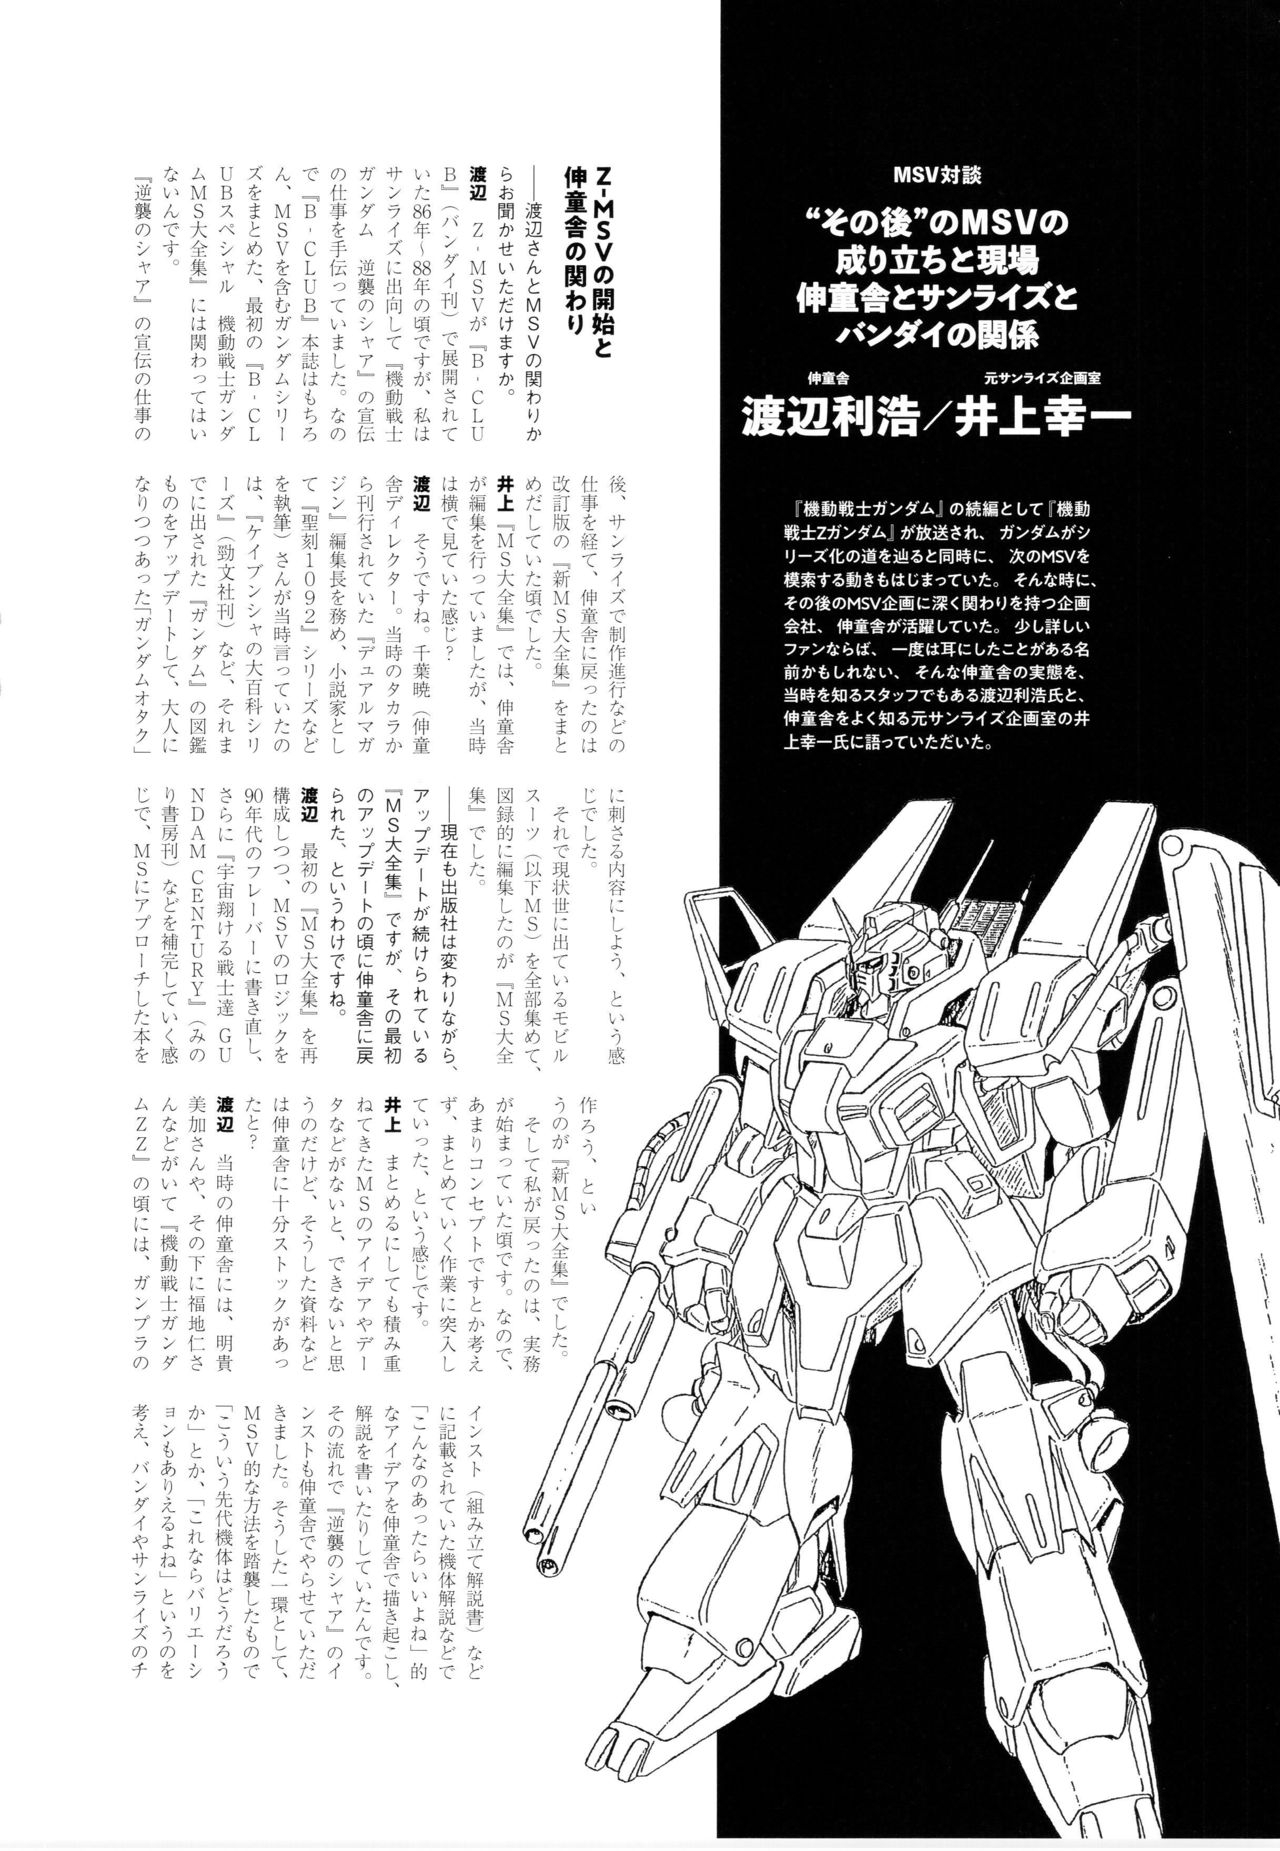 Mobile Suit Gundam - MSV The Second - Generation 1986-1993 95